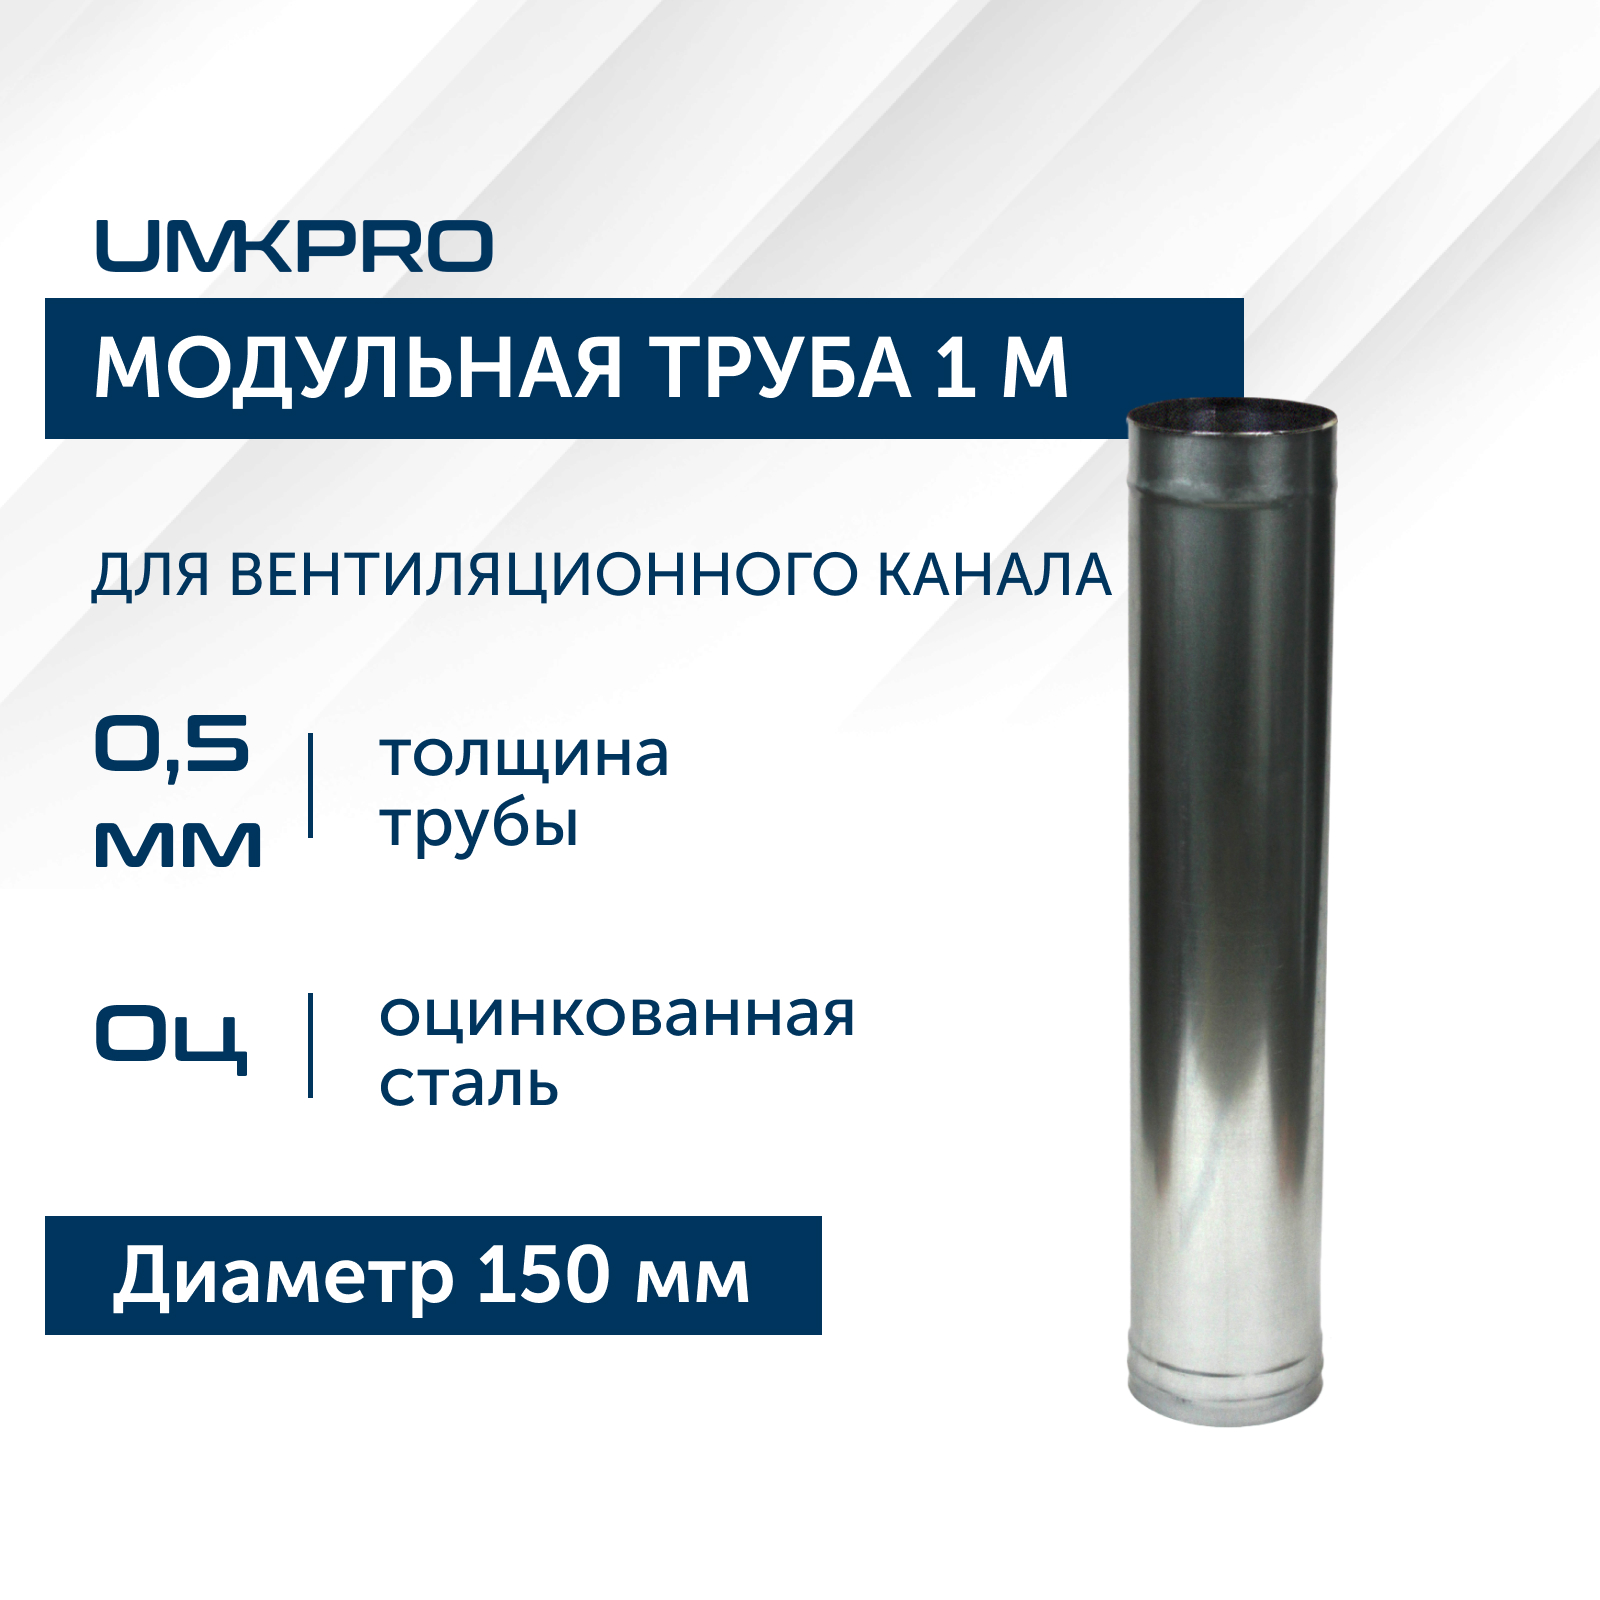 Труба модульная для дымохода 1 м UMKPRO, D 150, Оц/0,5мм модульная прихожая кантри 10